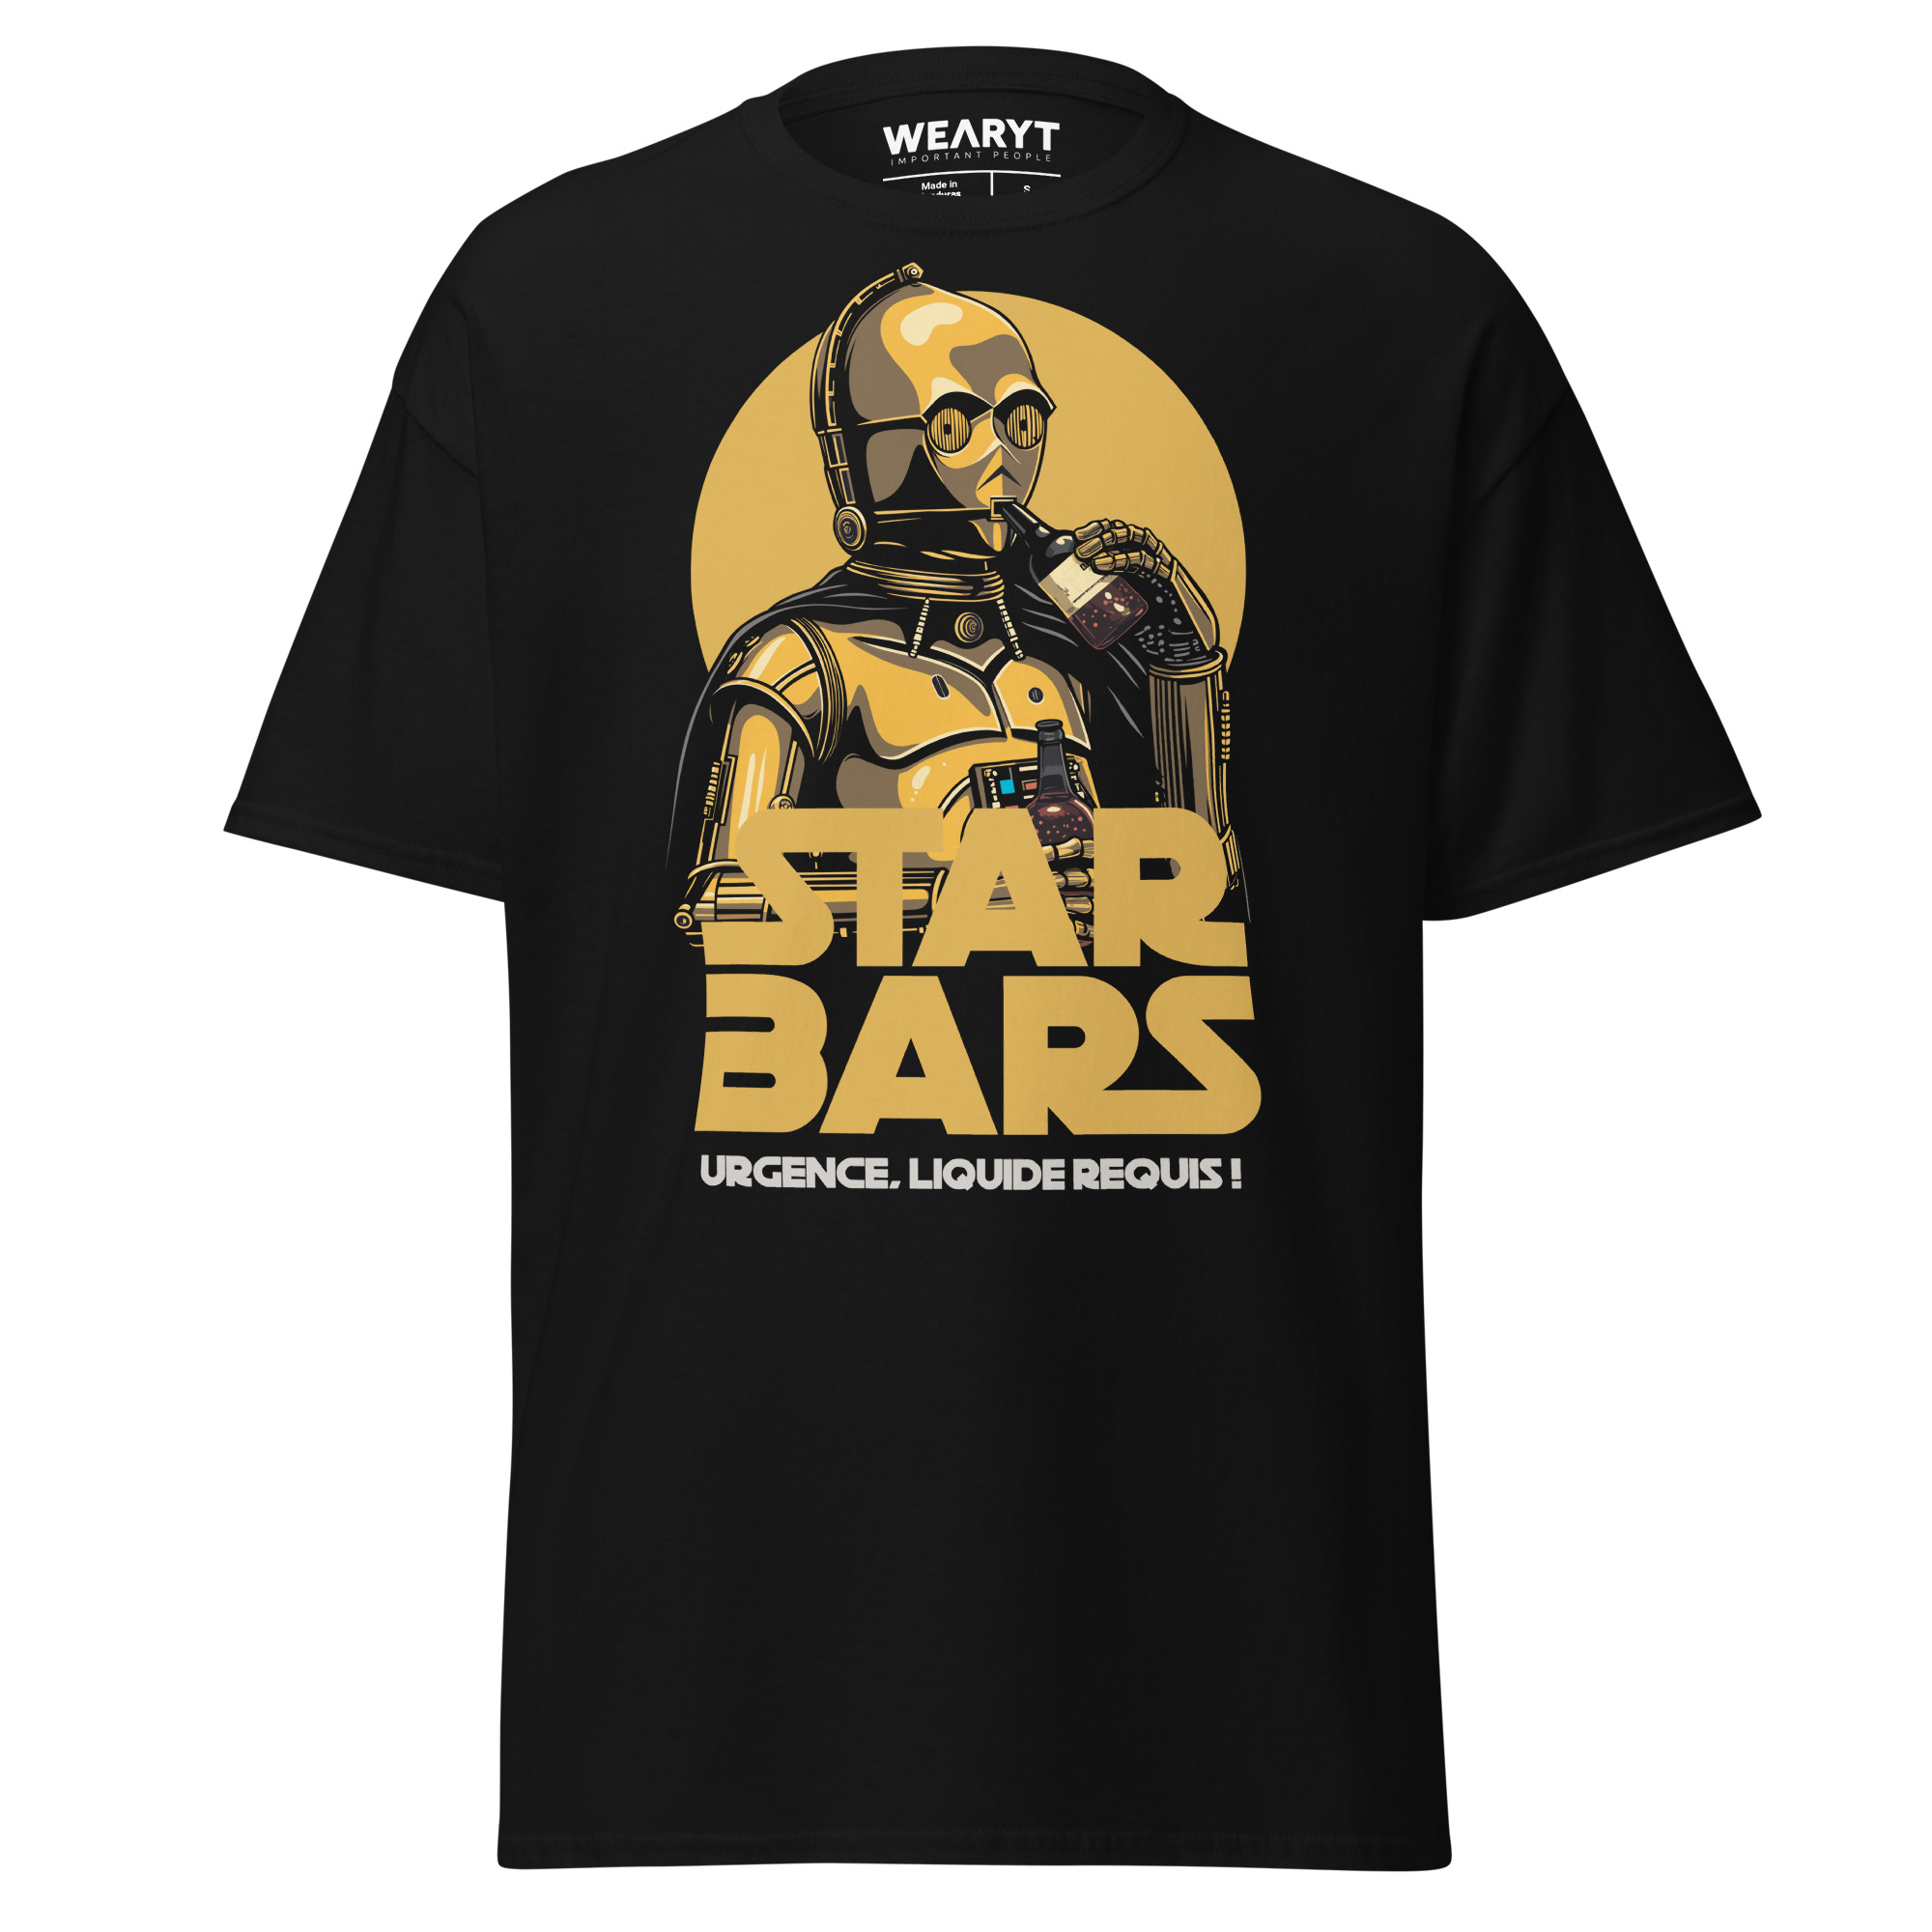 T-shirt – Star Bars – Emergency liquid required! Men's Clothing Wearyt